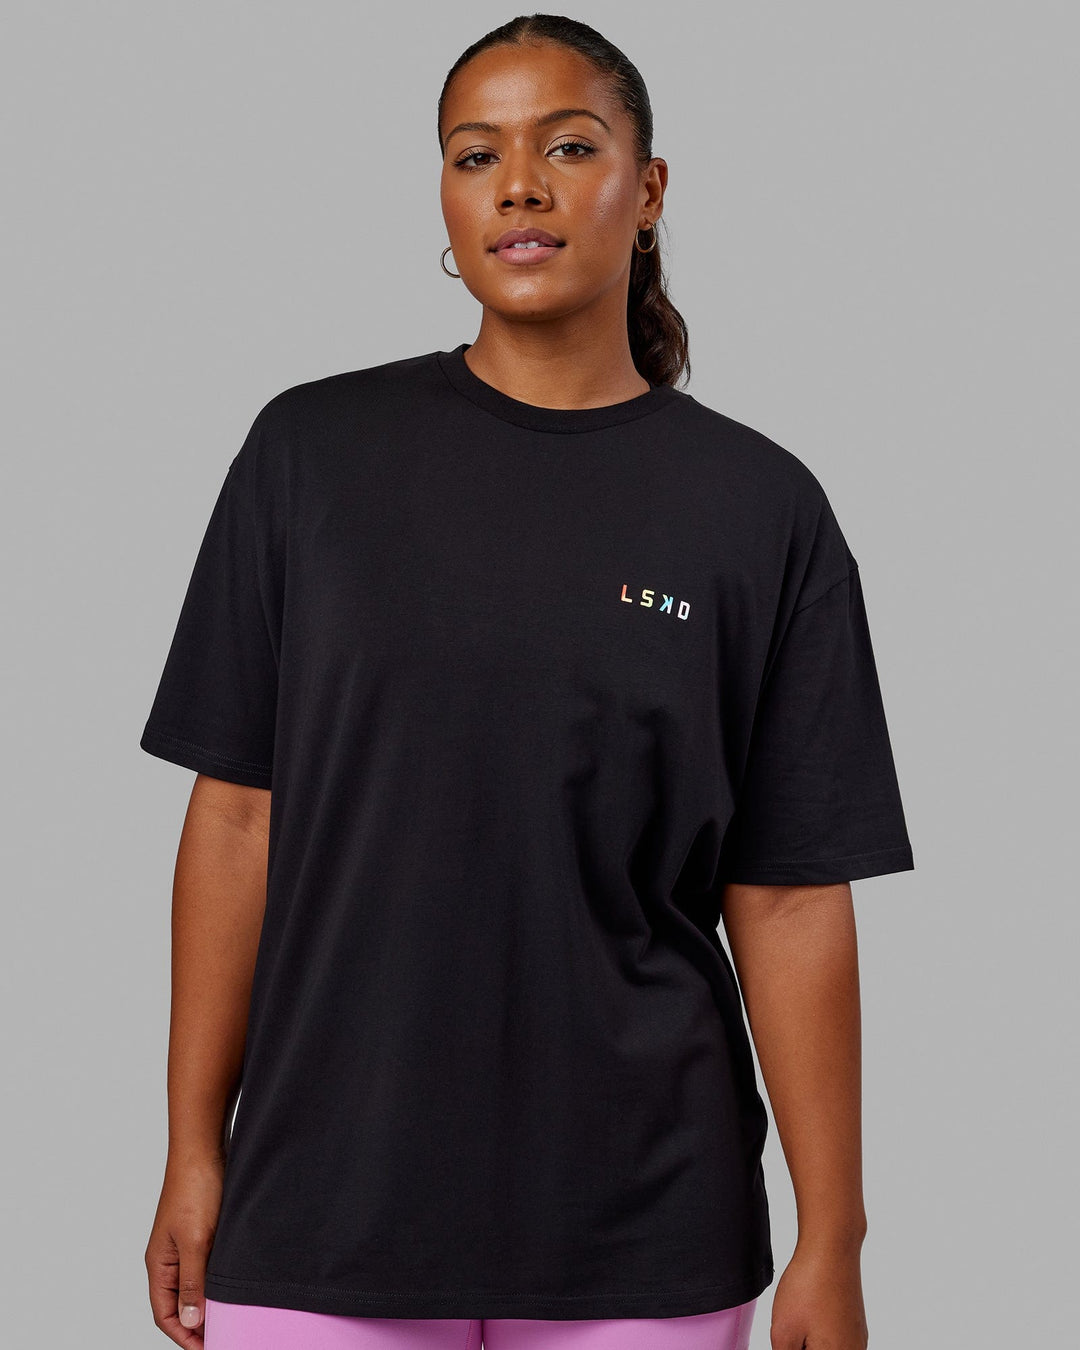 Woman wearing Unisex Amplify FLXCotton Tee Oversize - Black